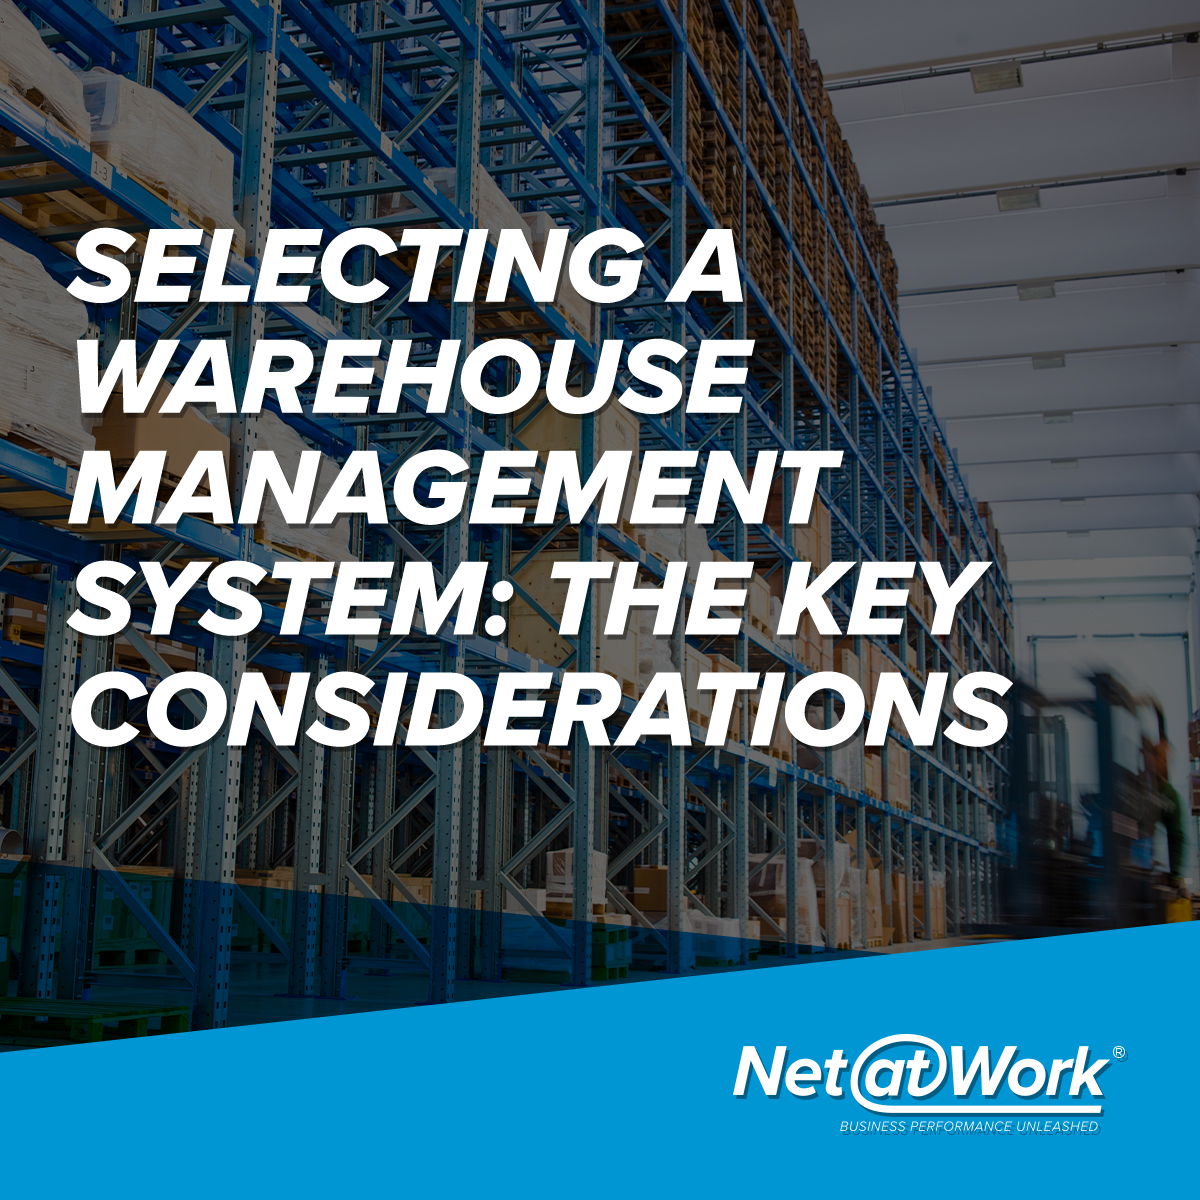 What next generation businesses consider when choosing a #WarehouseManagementSystem bit.ly/3wyaPyF

#warehousemanagement #warehouseautomation #warehousemanagementsystems #warehousesolutions #wms #erpintegration